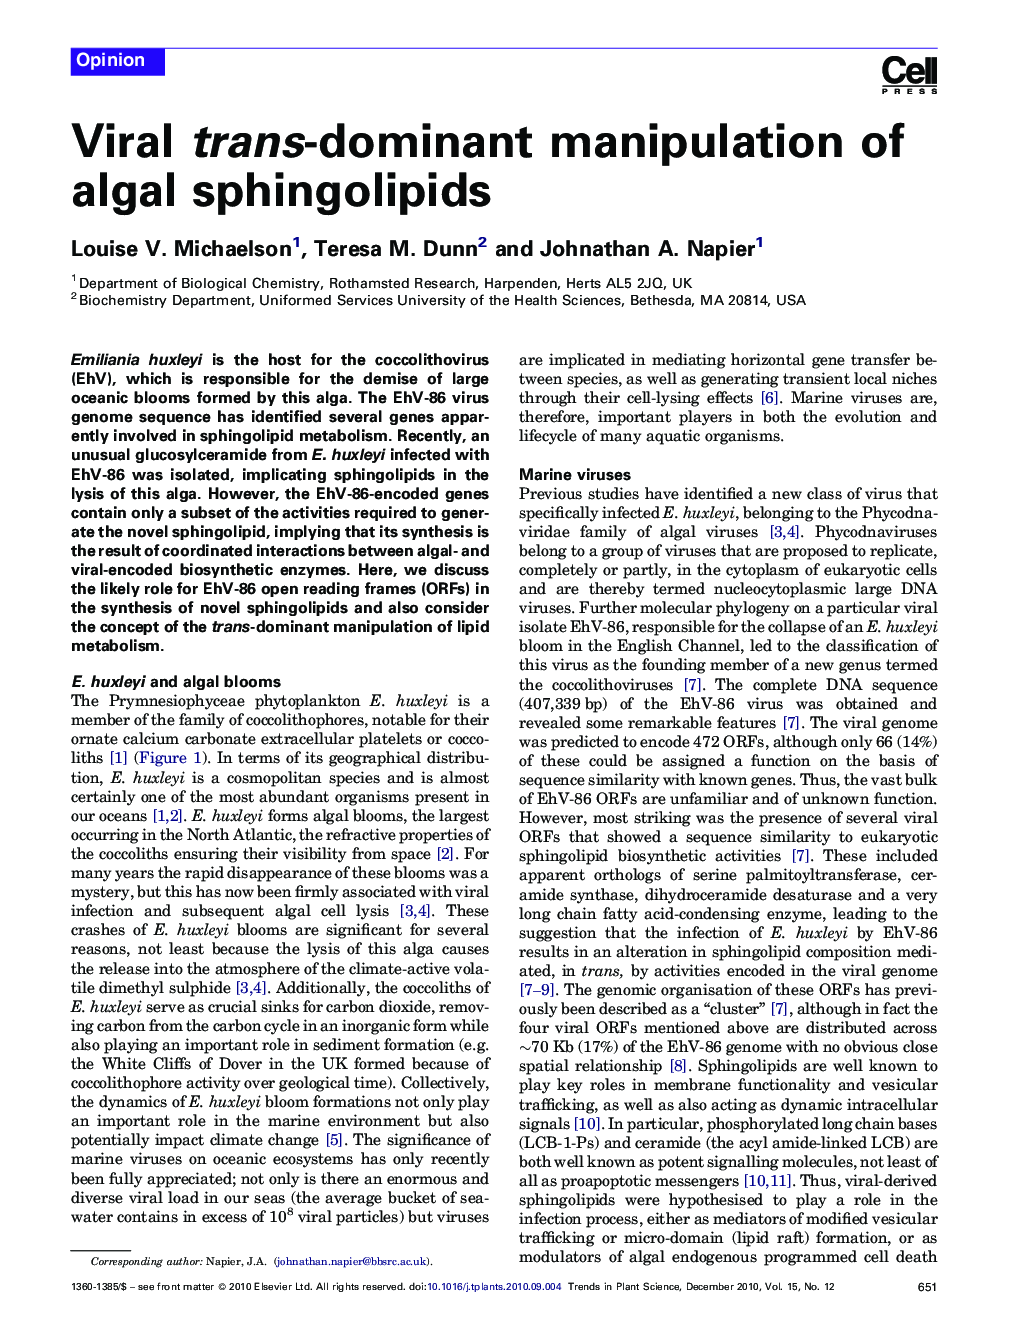 Viral trans-dominant manipulation of algal sphingolipids